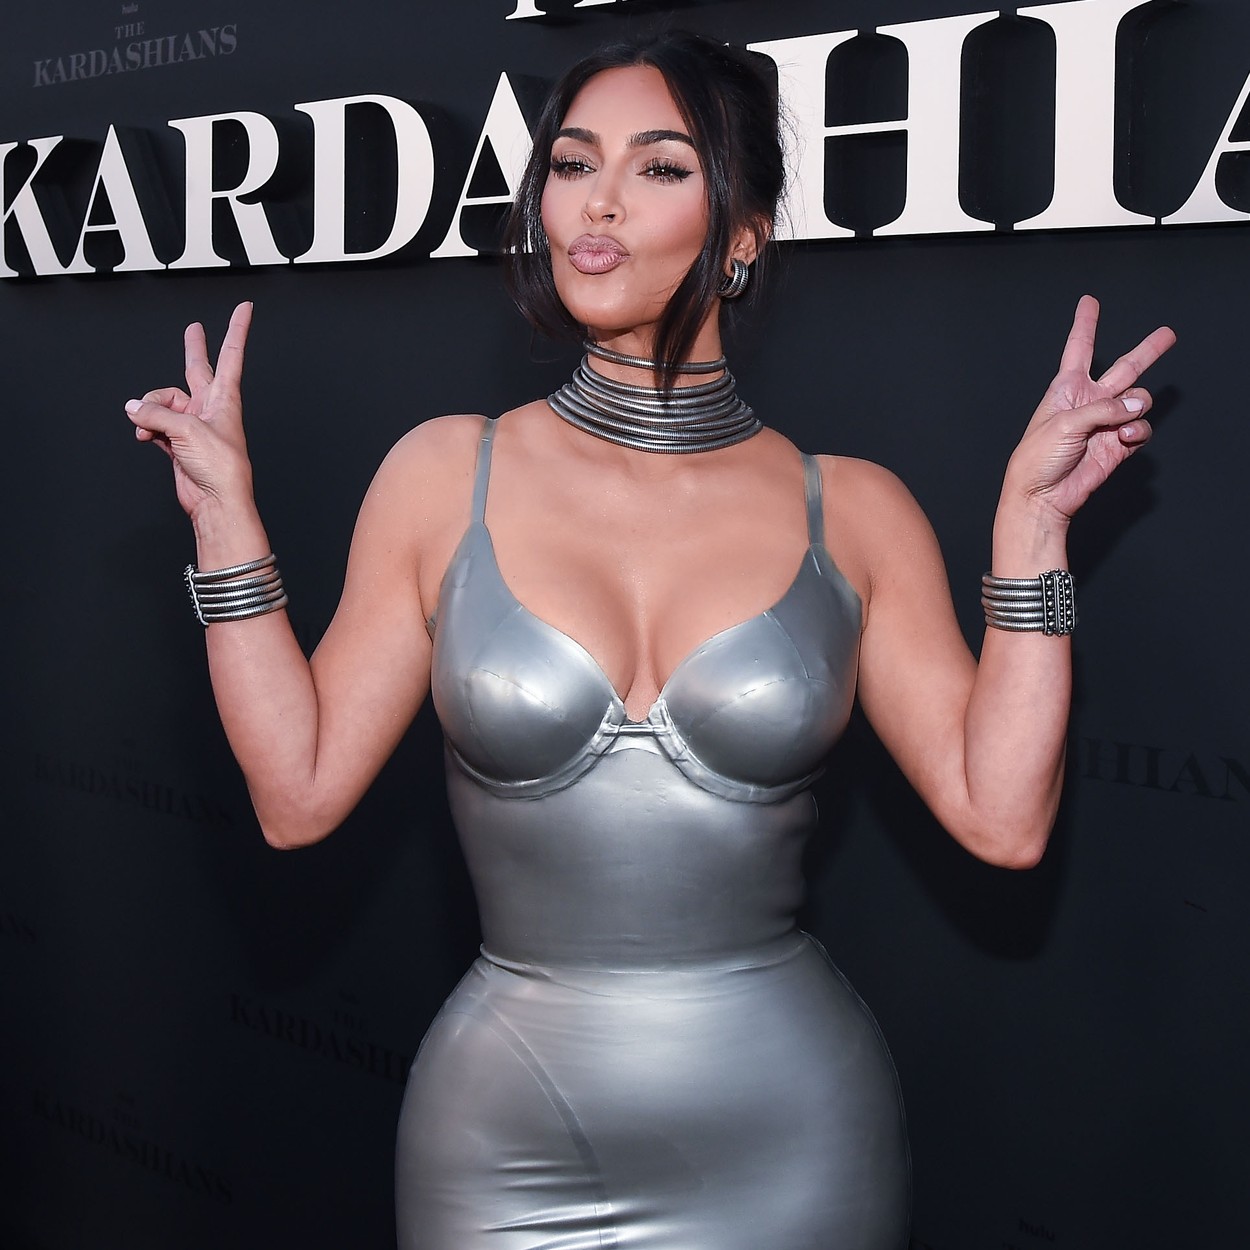 She nailed it! Kim Kardashian este imaginea brandului Balenciaga. Ce produs promovează miliardara